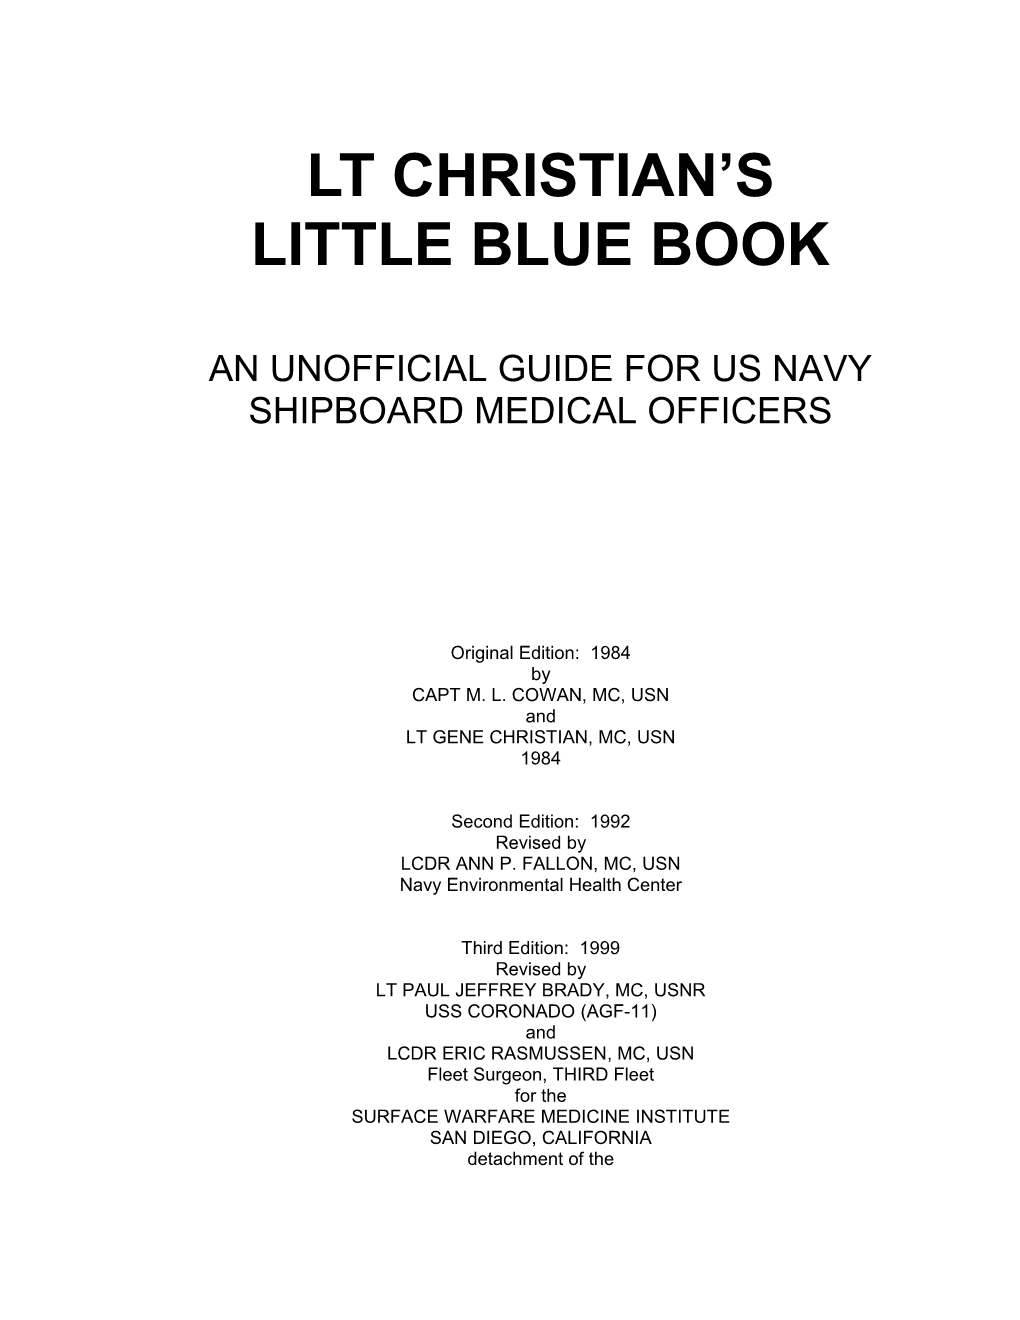 Lt Christian’S Little Blue Book: